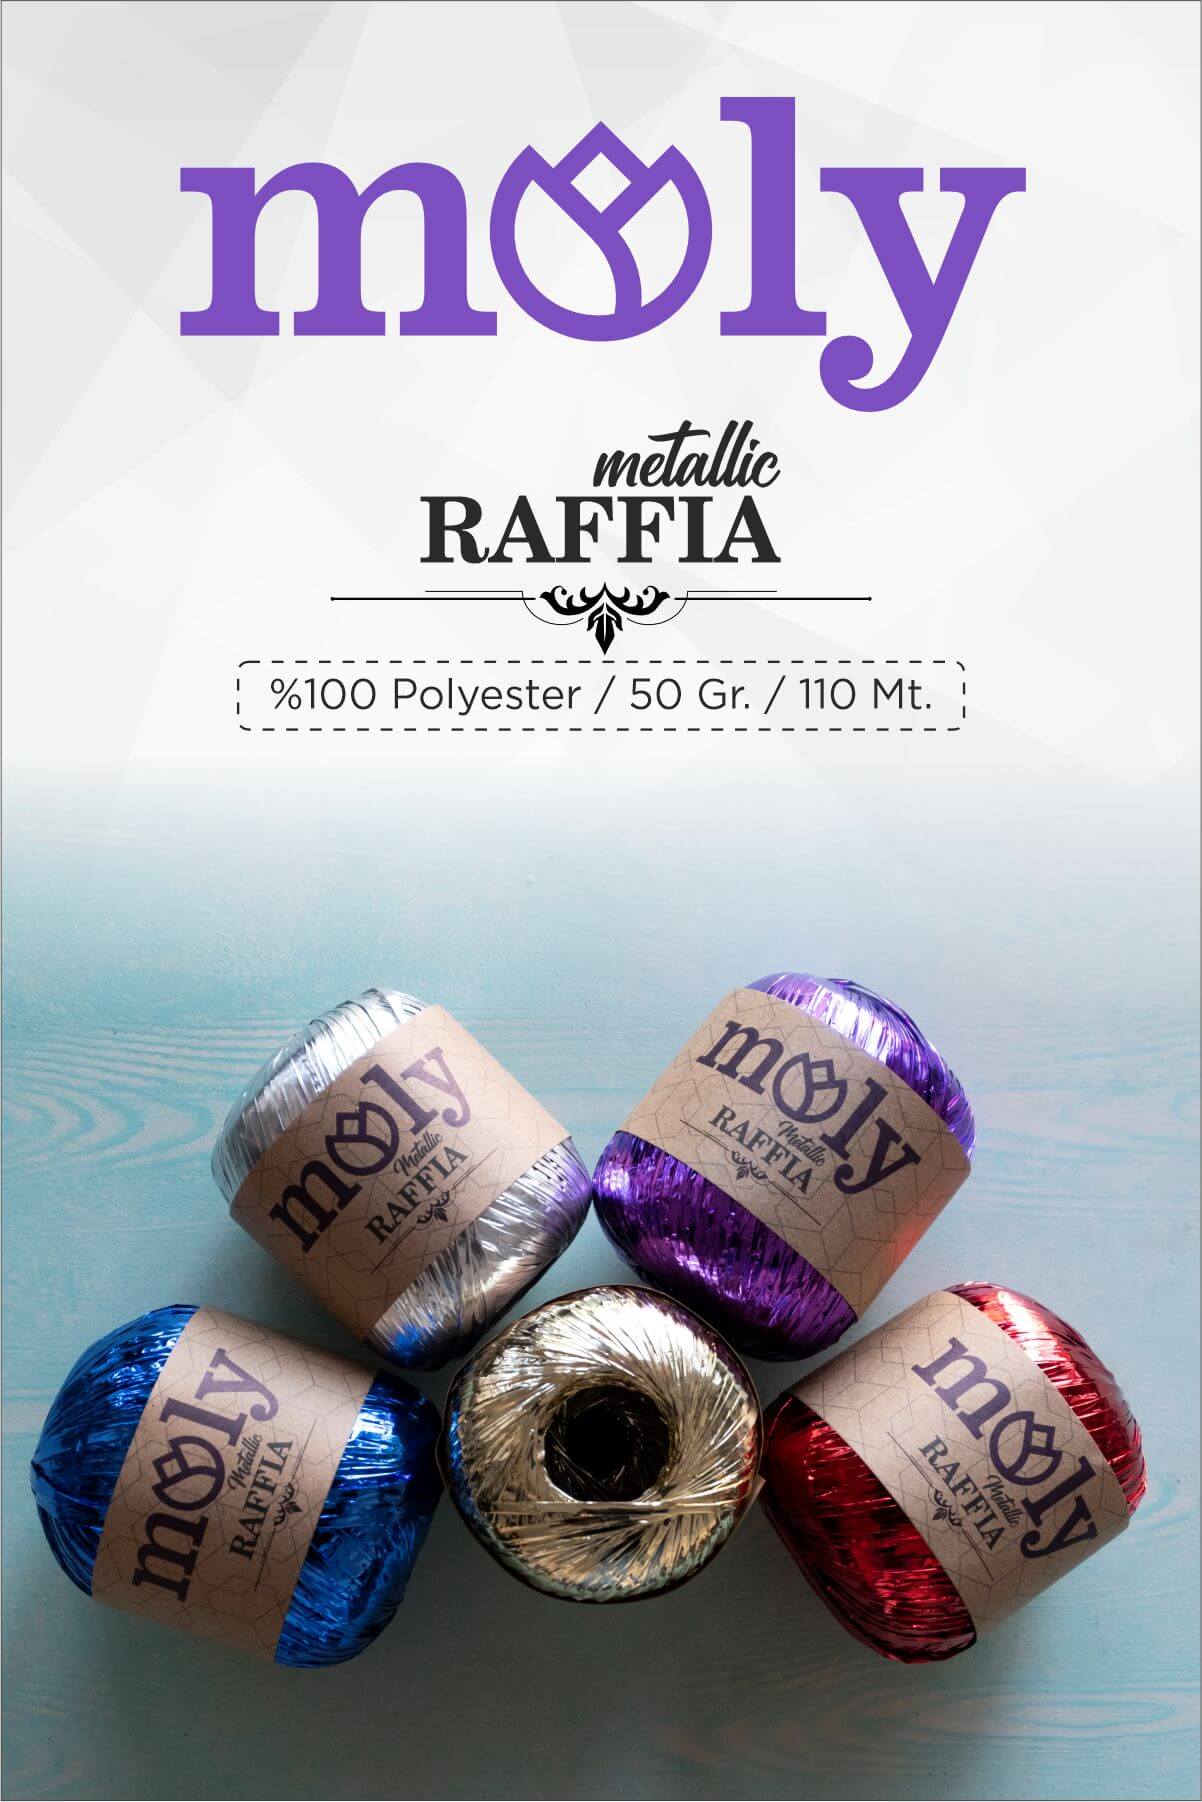 moly-raffia-metalic-tekstilland